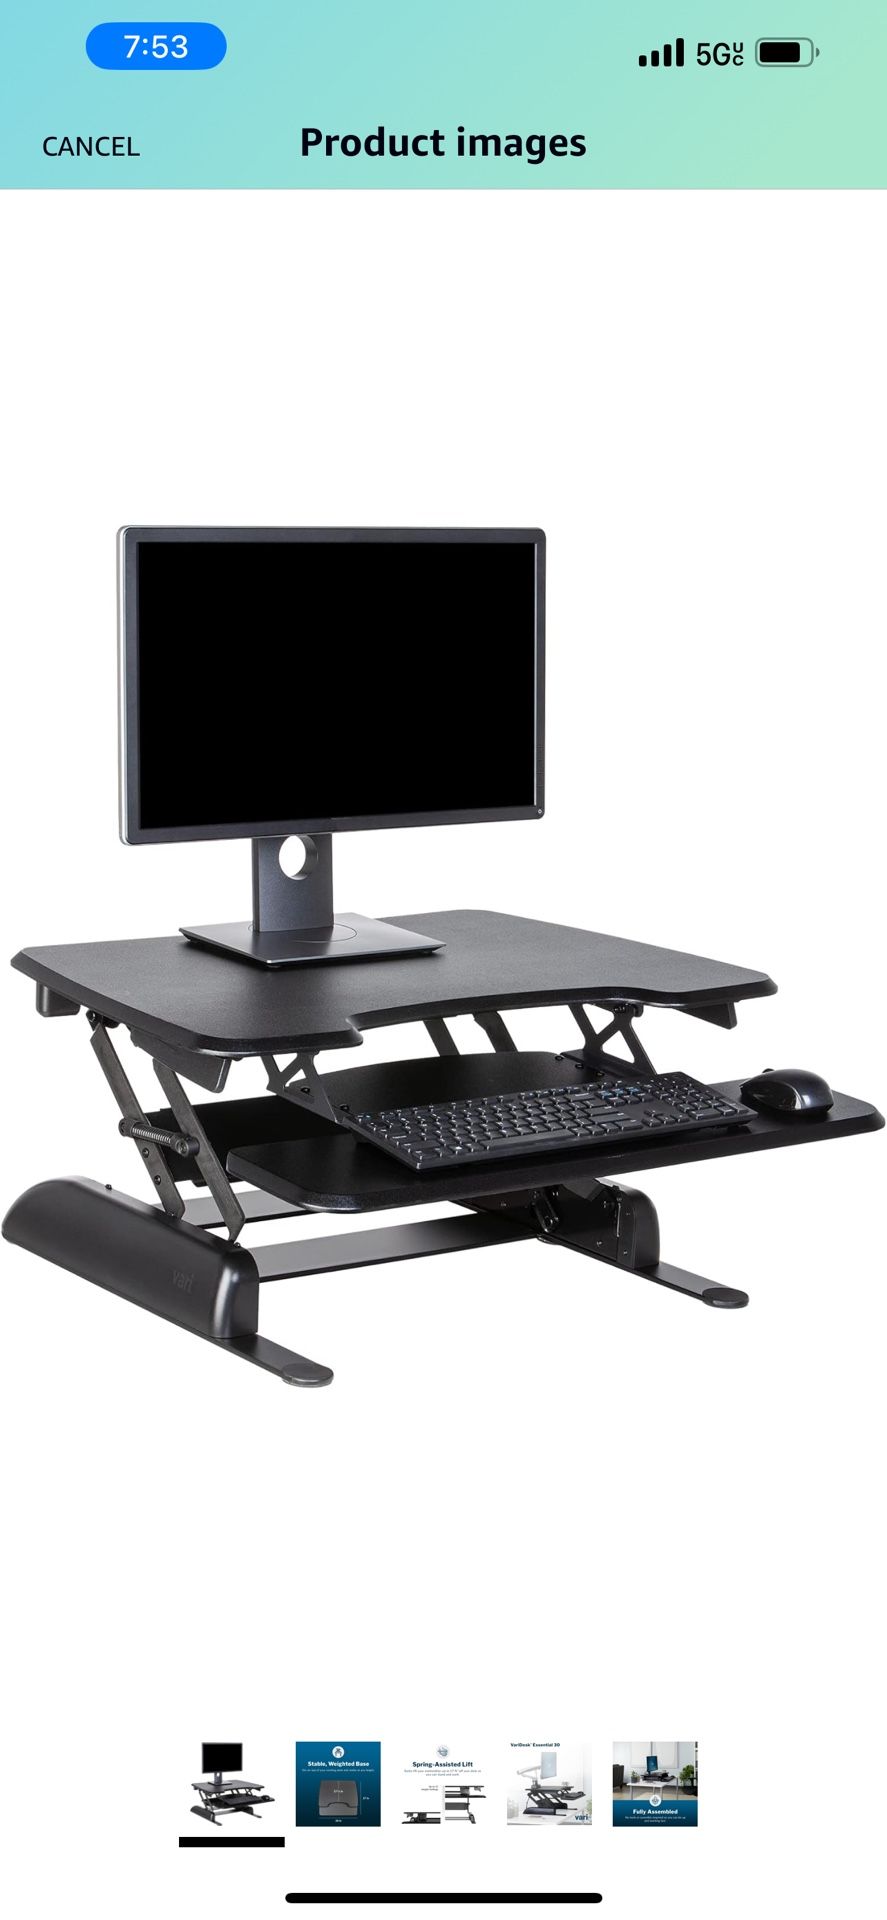 Two-Tier Standing Desk Converter - Adjustable Sit / Stand w Height Settings -Desk riser , black, $98,